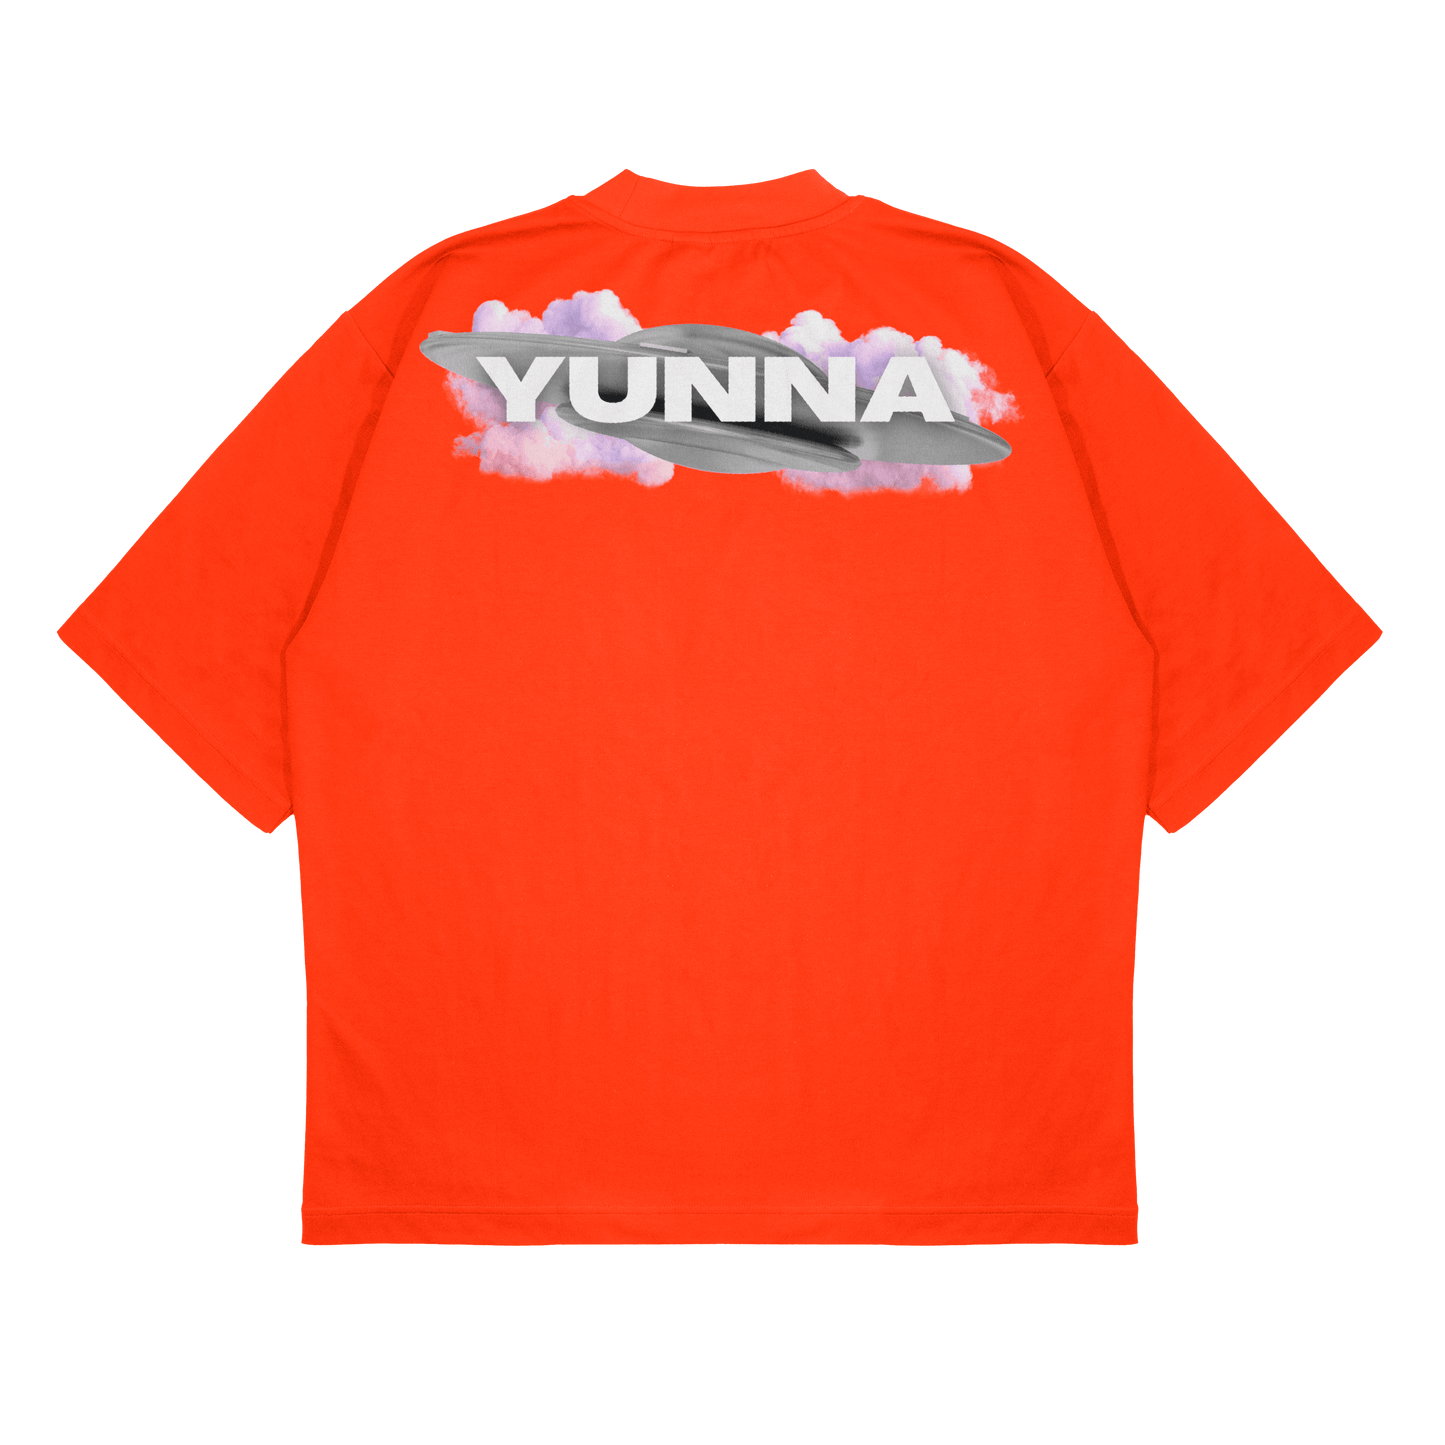 Yunna Tour #2